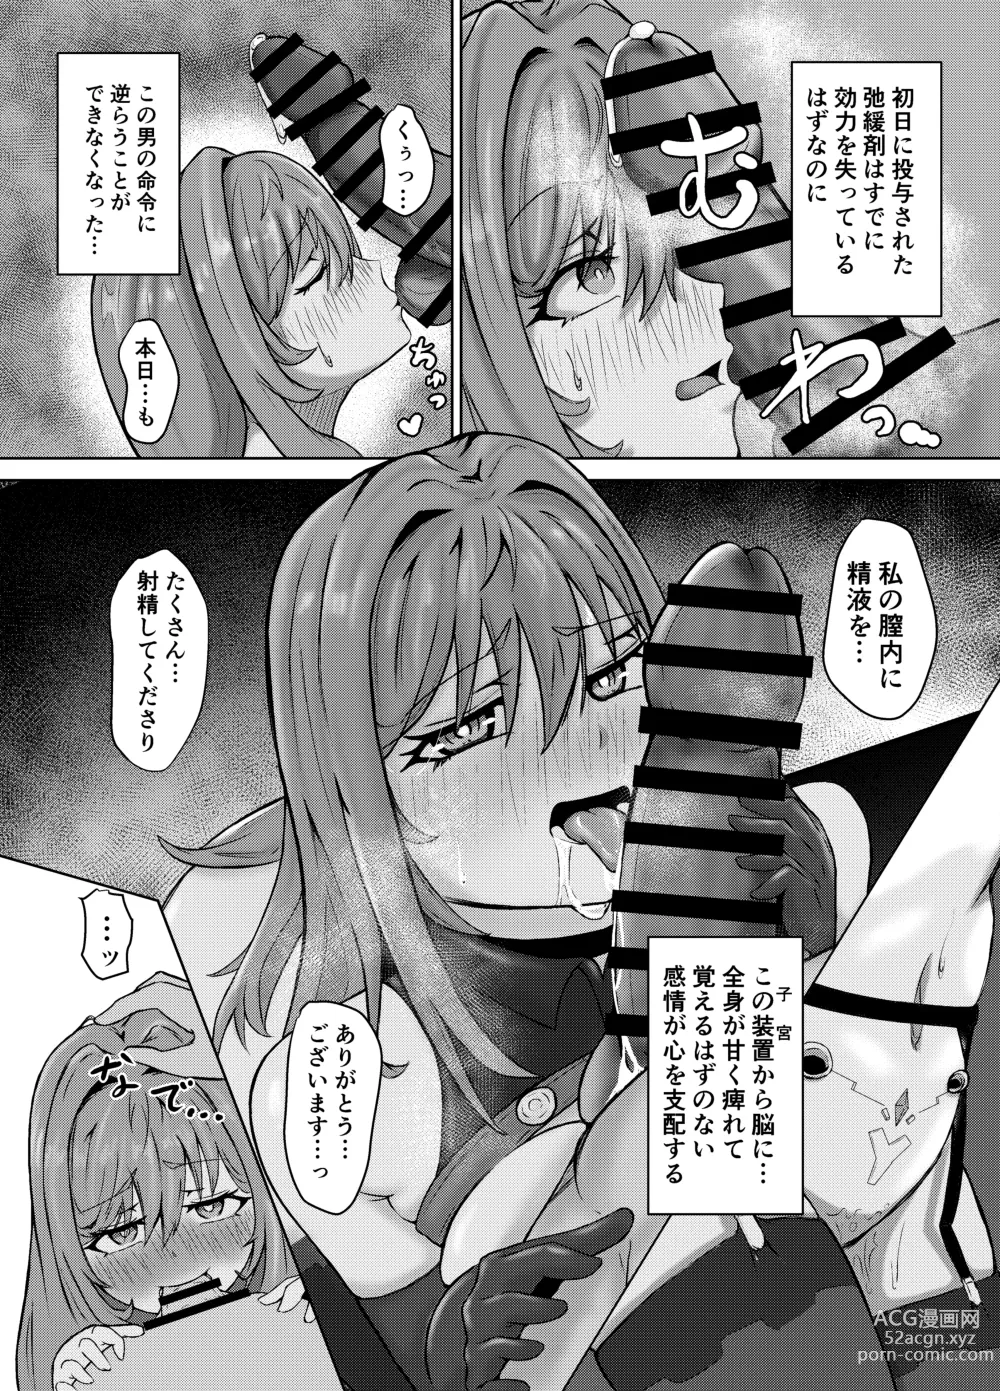 Page 22 of doujinshi NTRapi NetoRapi Outer Rim no Hanayome Zenpen